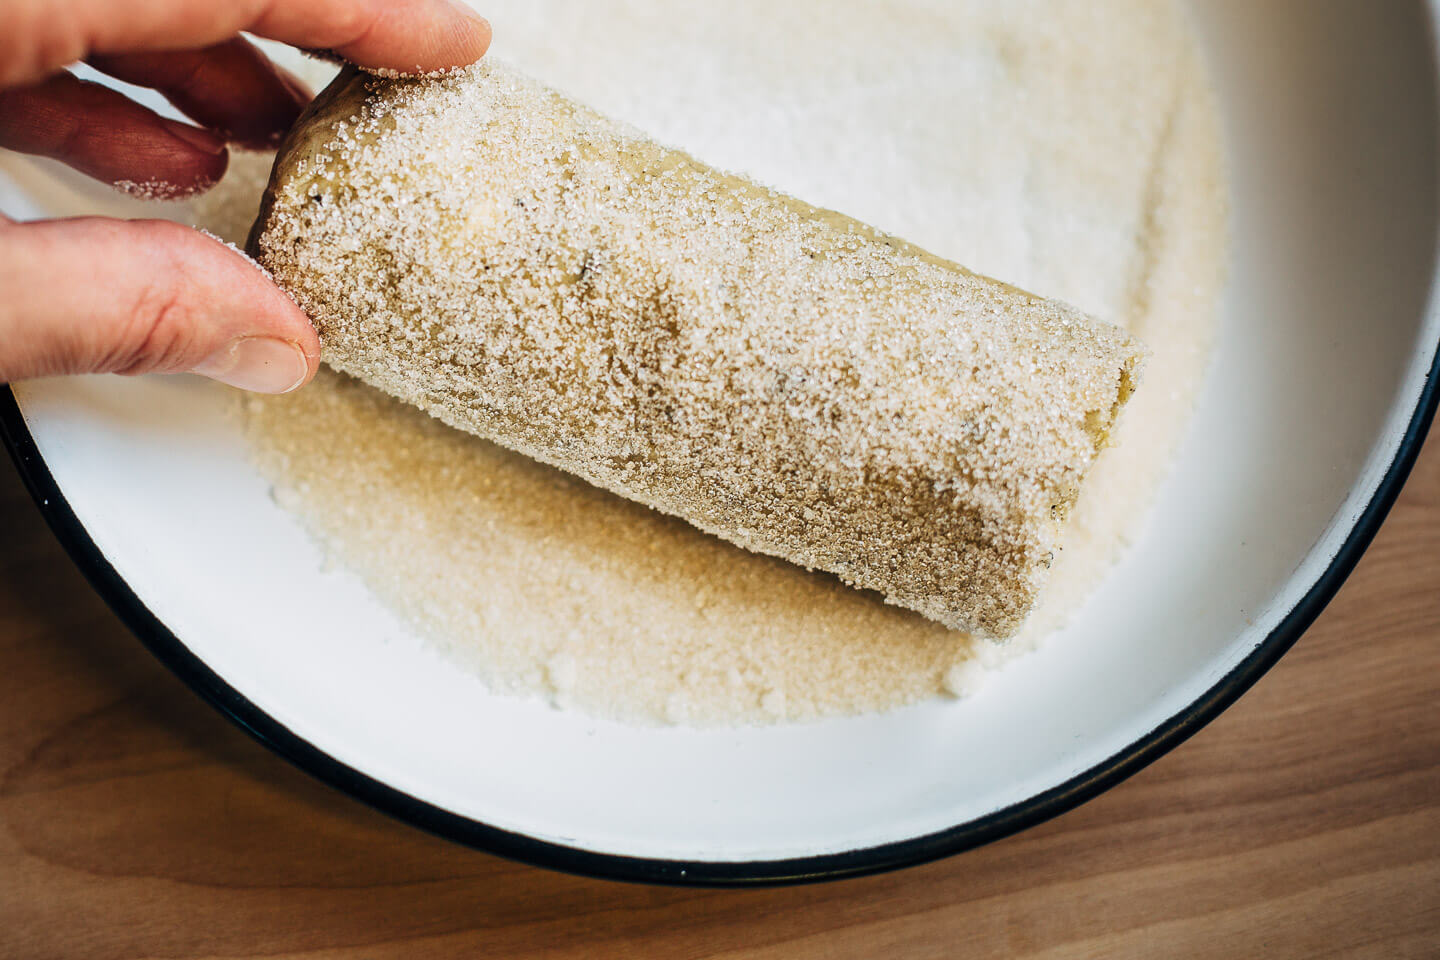 Rolling Earl Grey sablé dough in cane sugar. 